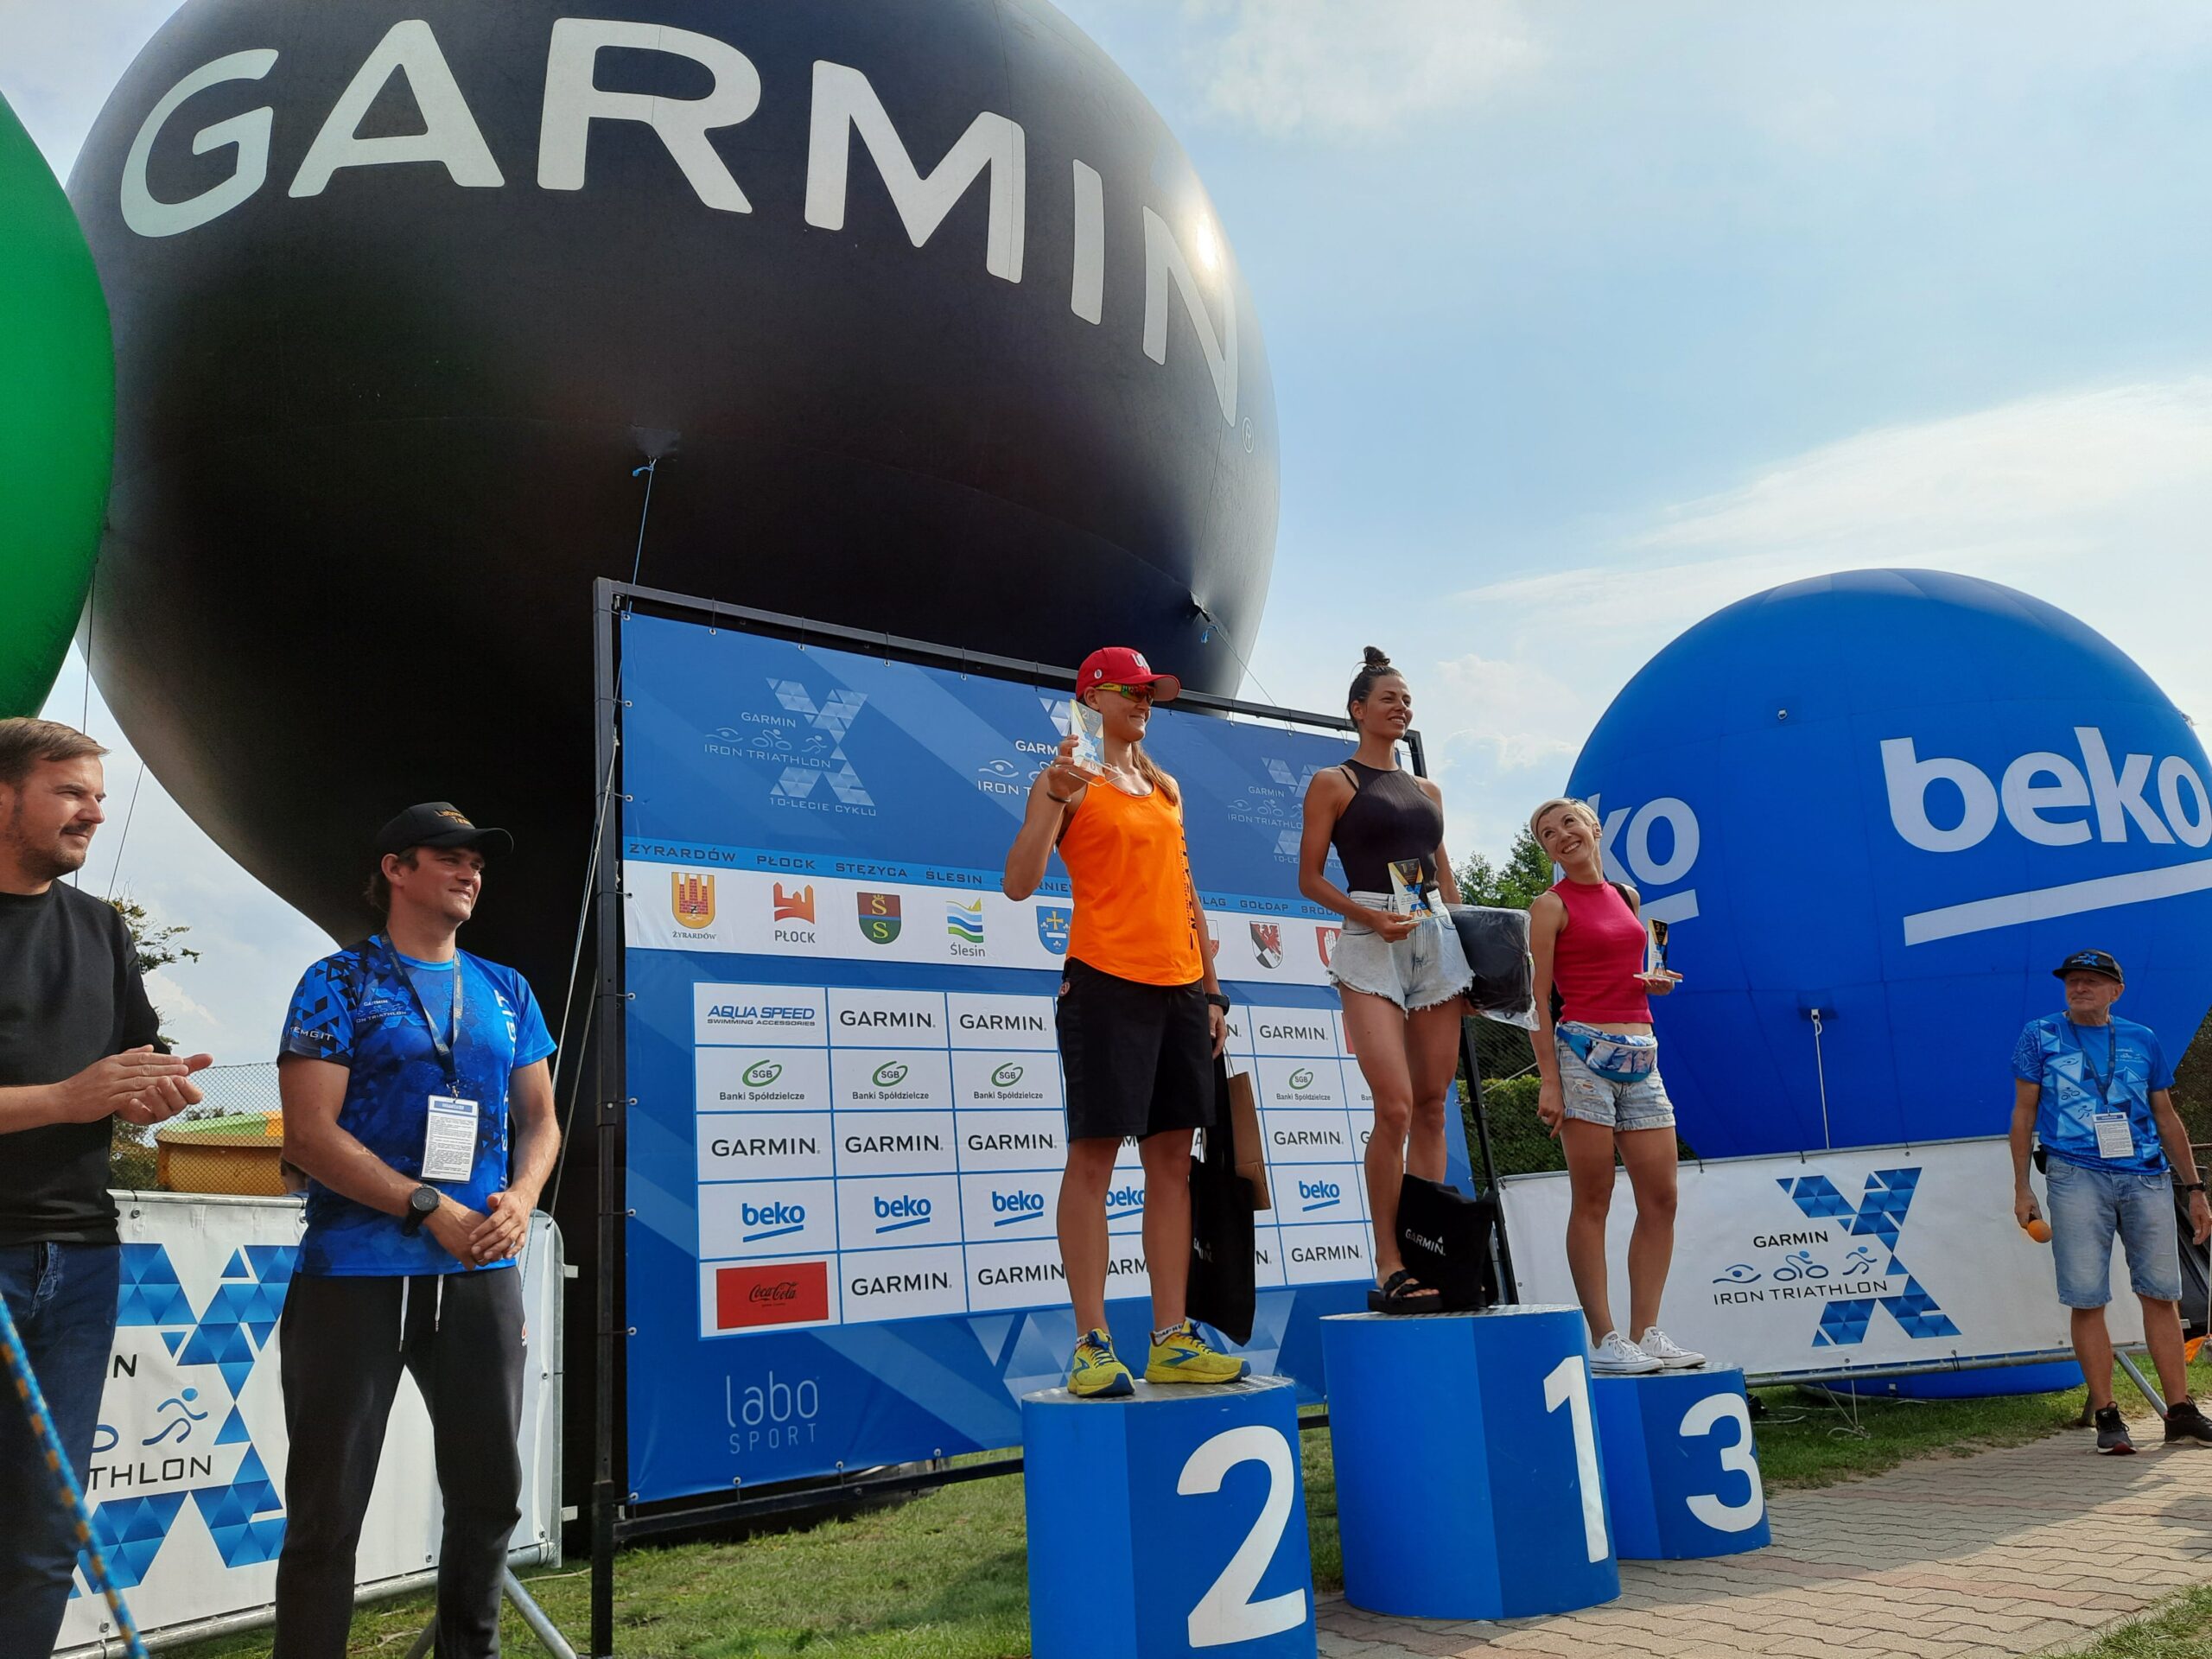 Garmin Iron Triathlon Brodnica